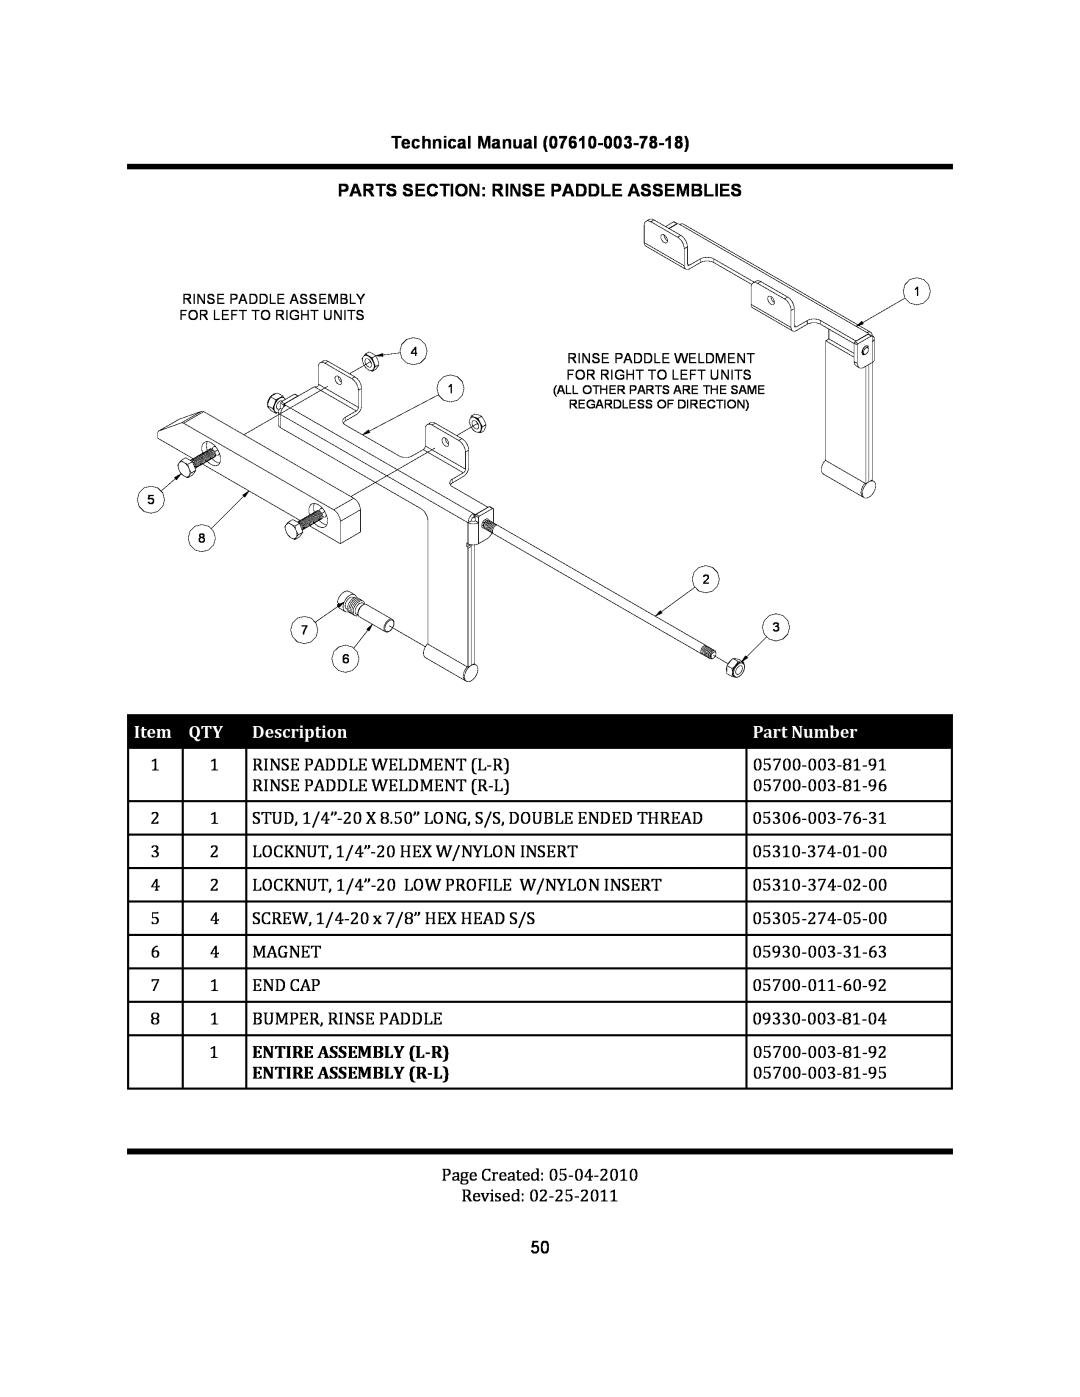 Jackson CREW 66S Technical Manual PARTS SECTION RINSE PADDLE ASSEMBLIES, Description, Part Number, Entire Assembly L‐R 